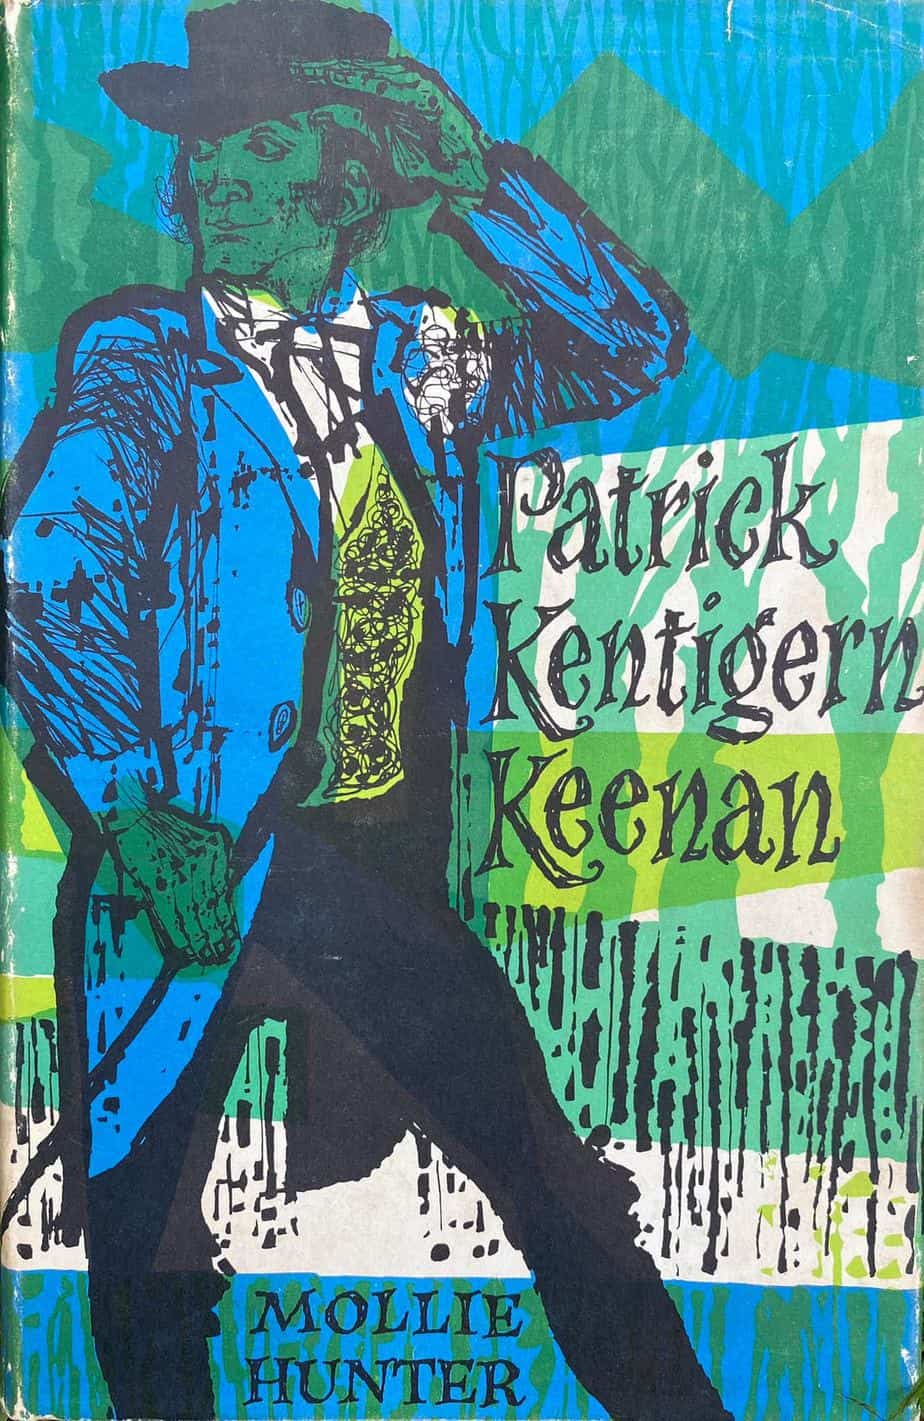 Charles Keeping for ‘Patrick Kentigern Keenan’ 1963 US title ‘The smartest man in Ireland’